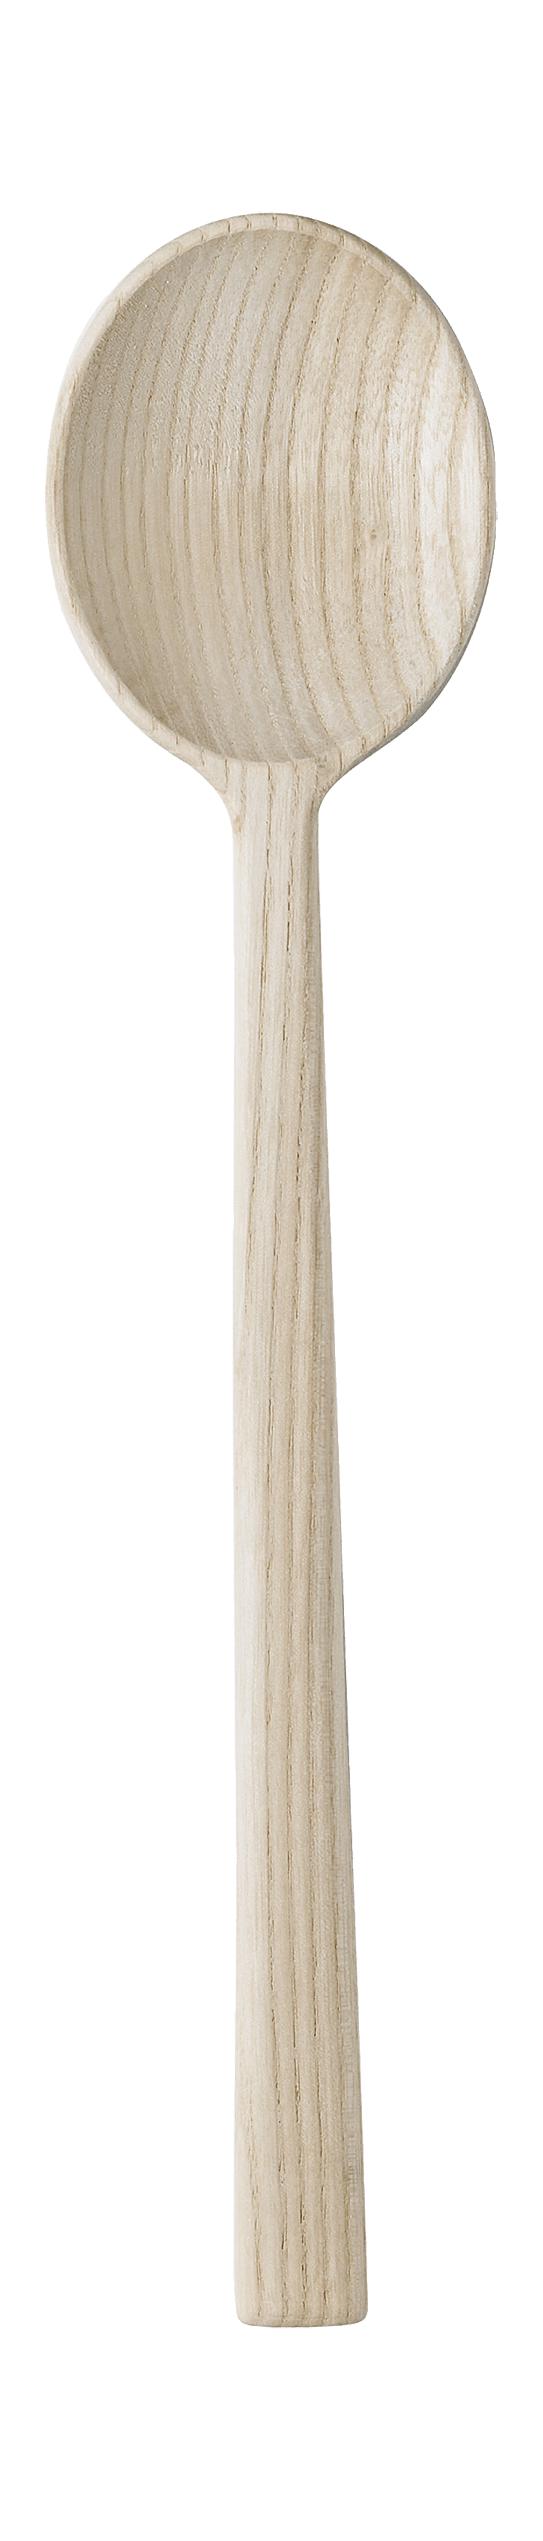 Rigg tig woody rörande sked, 26,5 cm